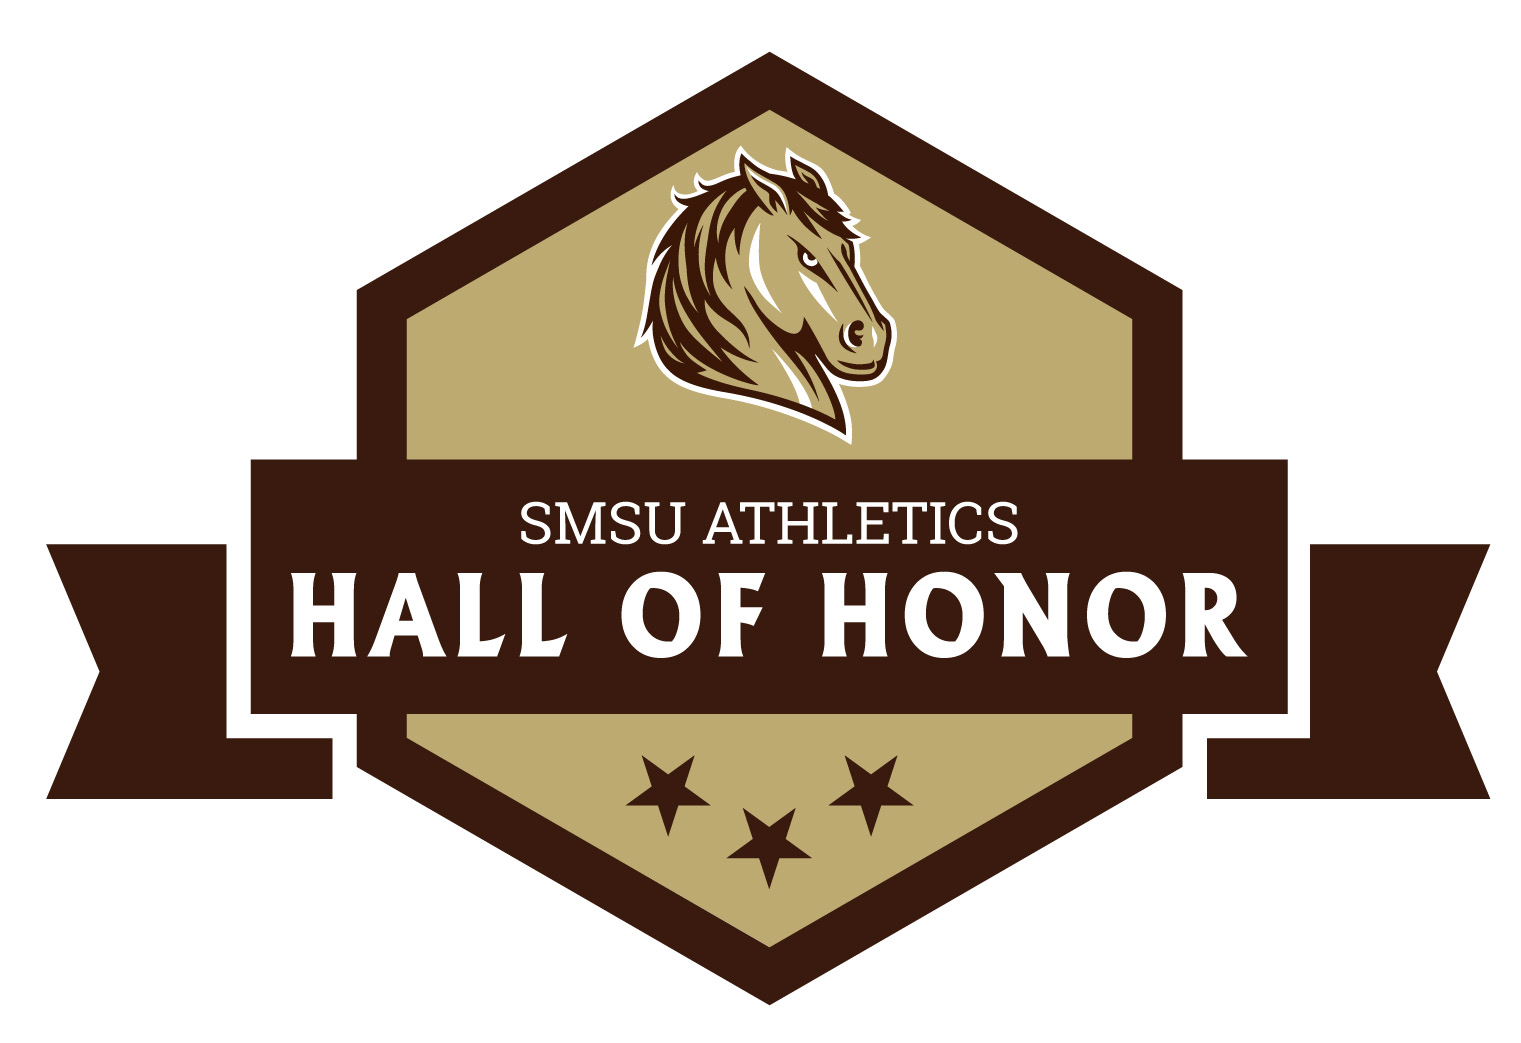 Hall of Honor logo